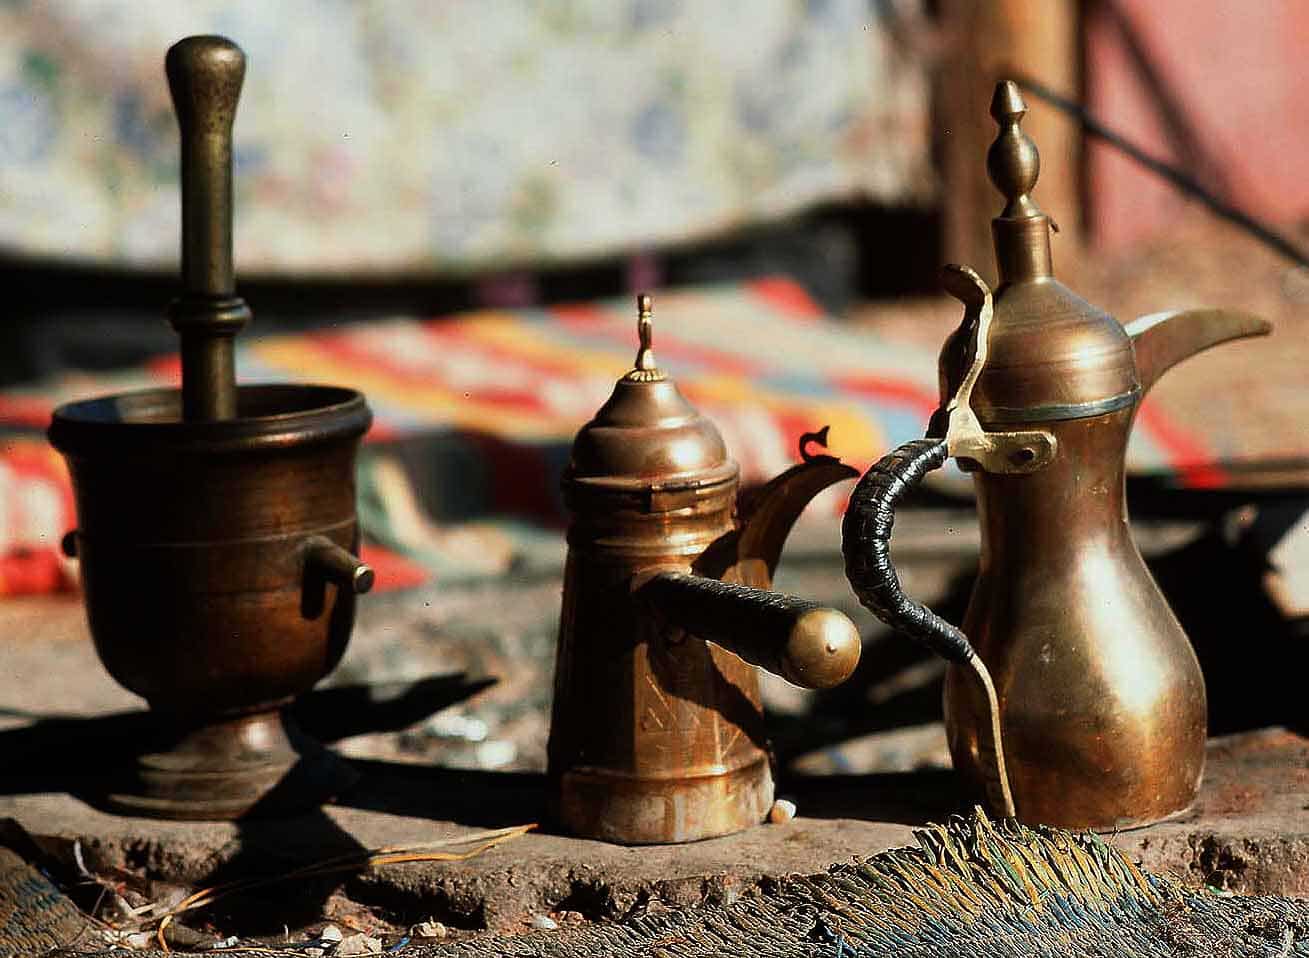 Bedouin coffee in Jordan